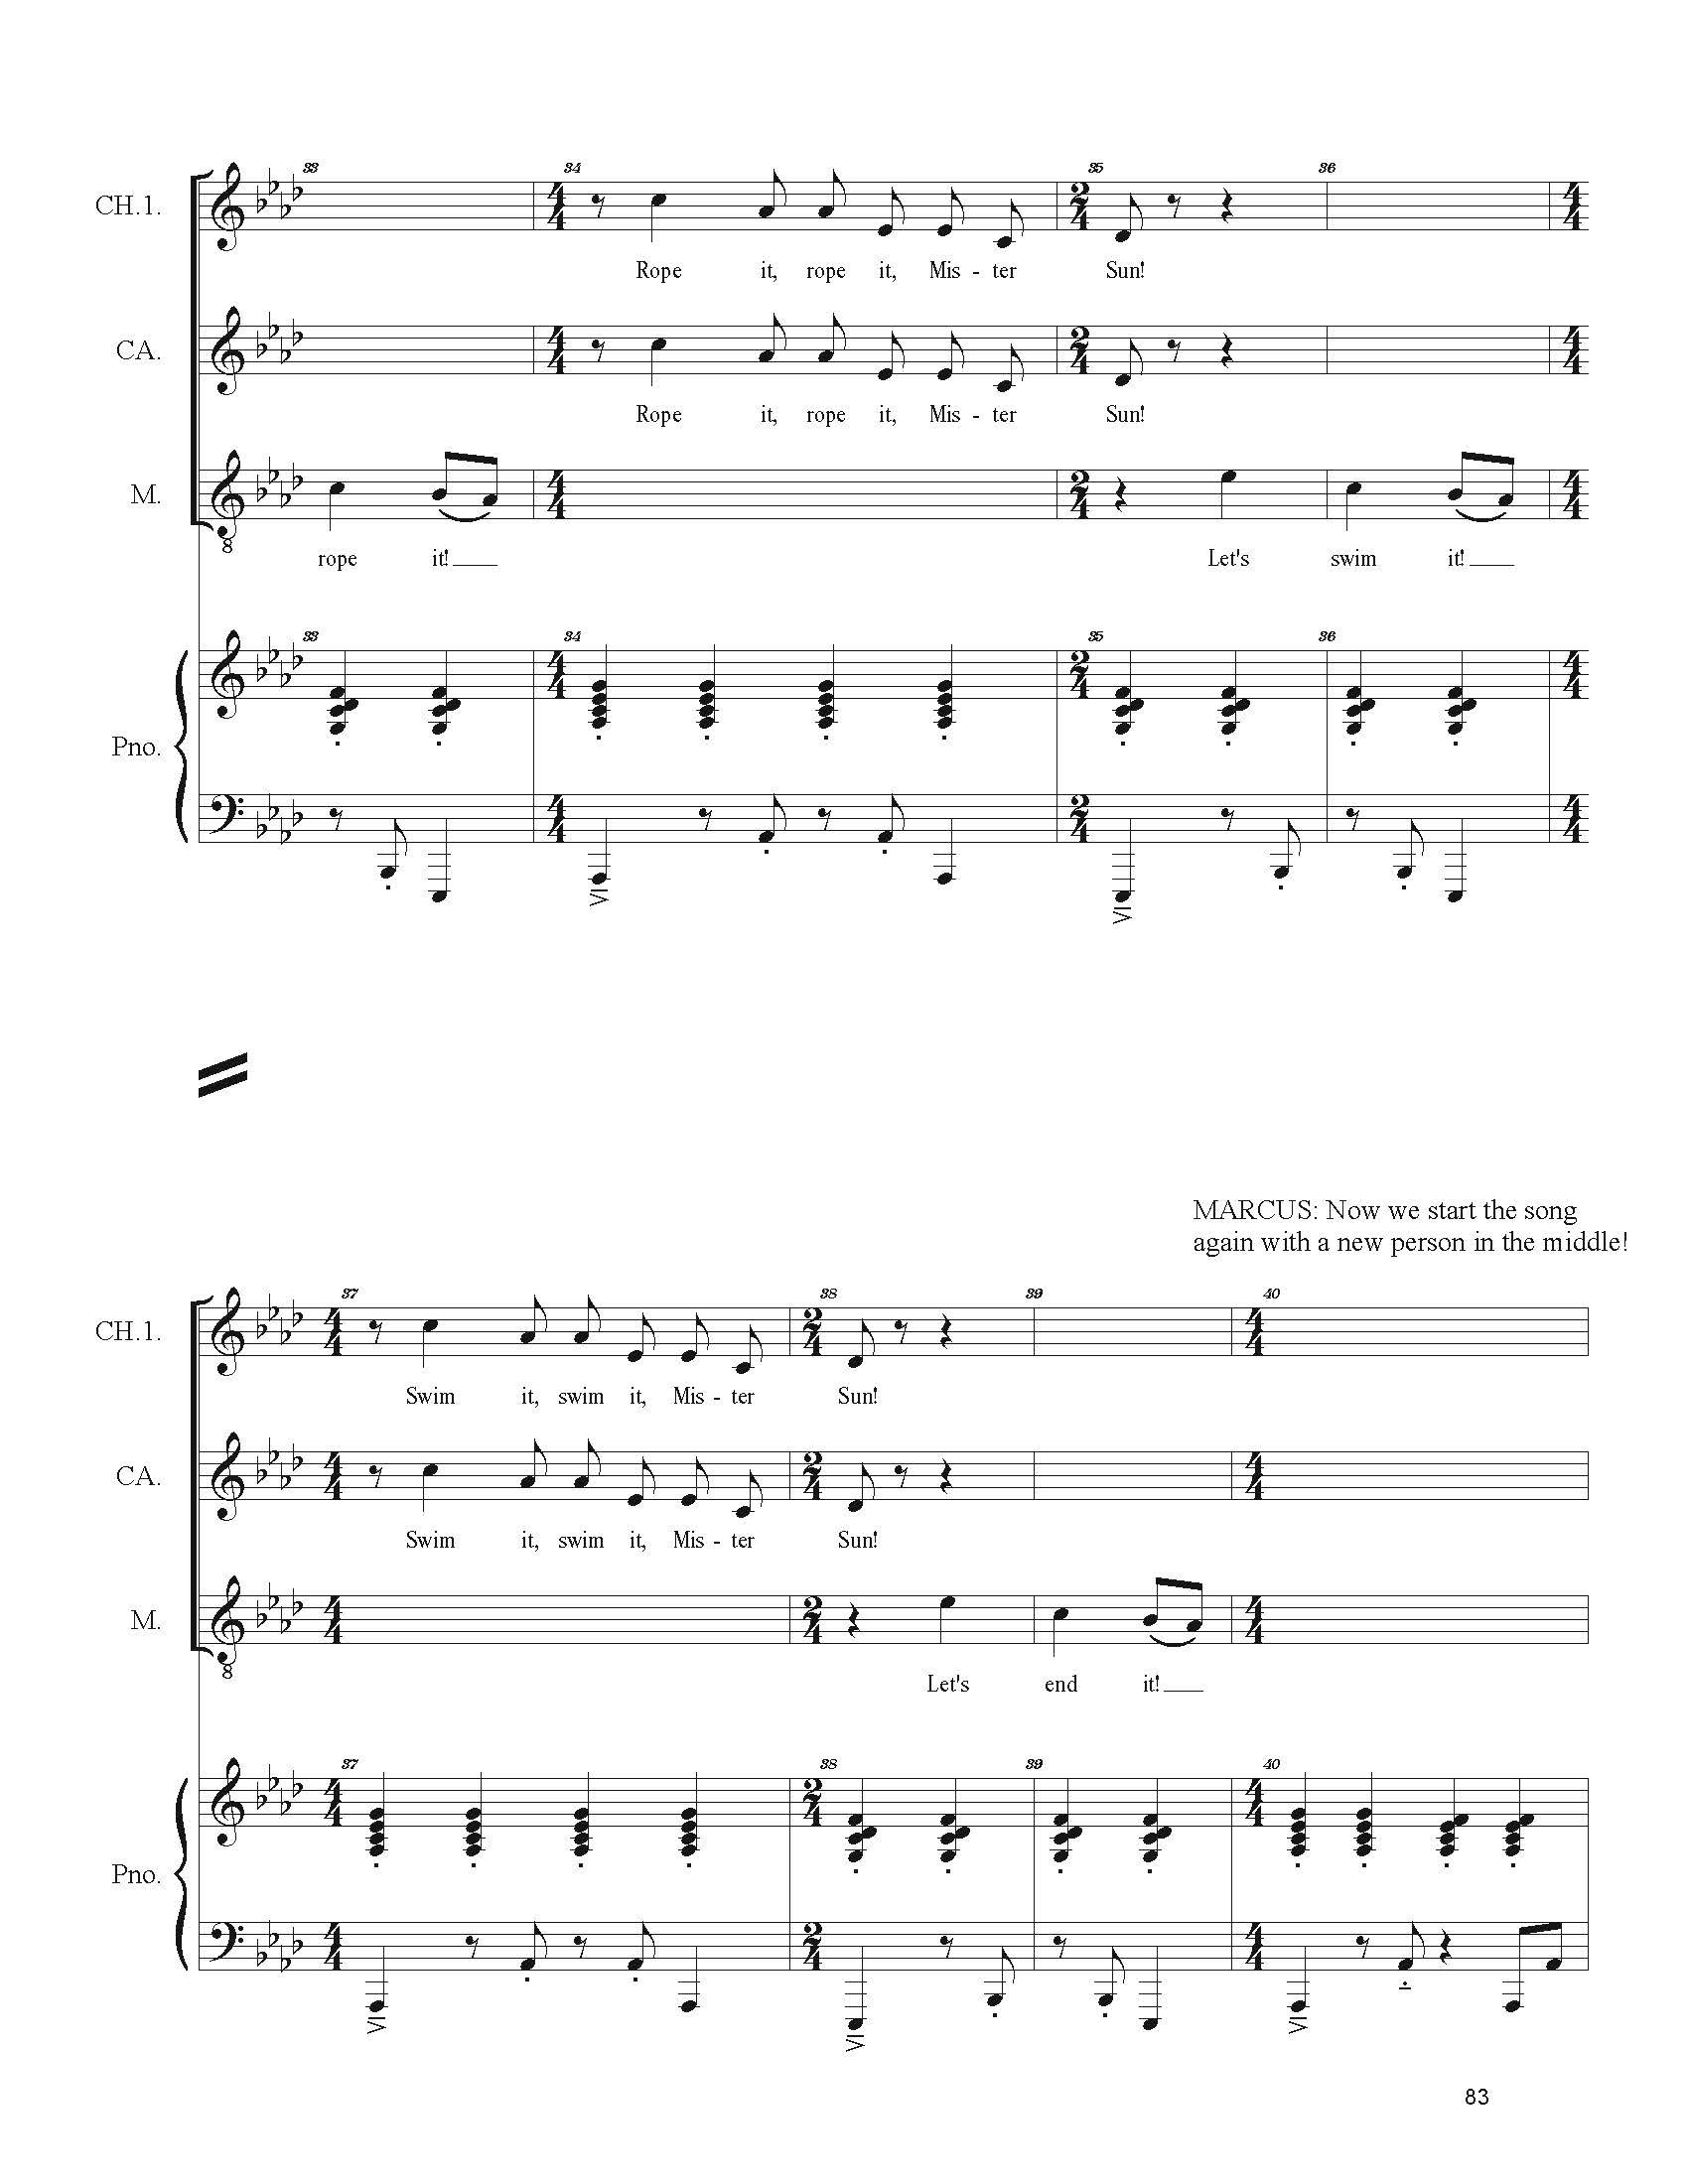 FULL PIANO VOCAL SCORE DRAFT 1 - Score_Page_083.jpg